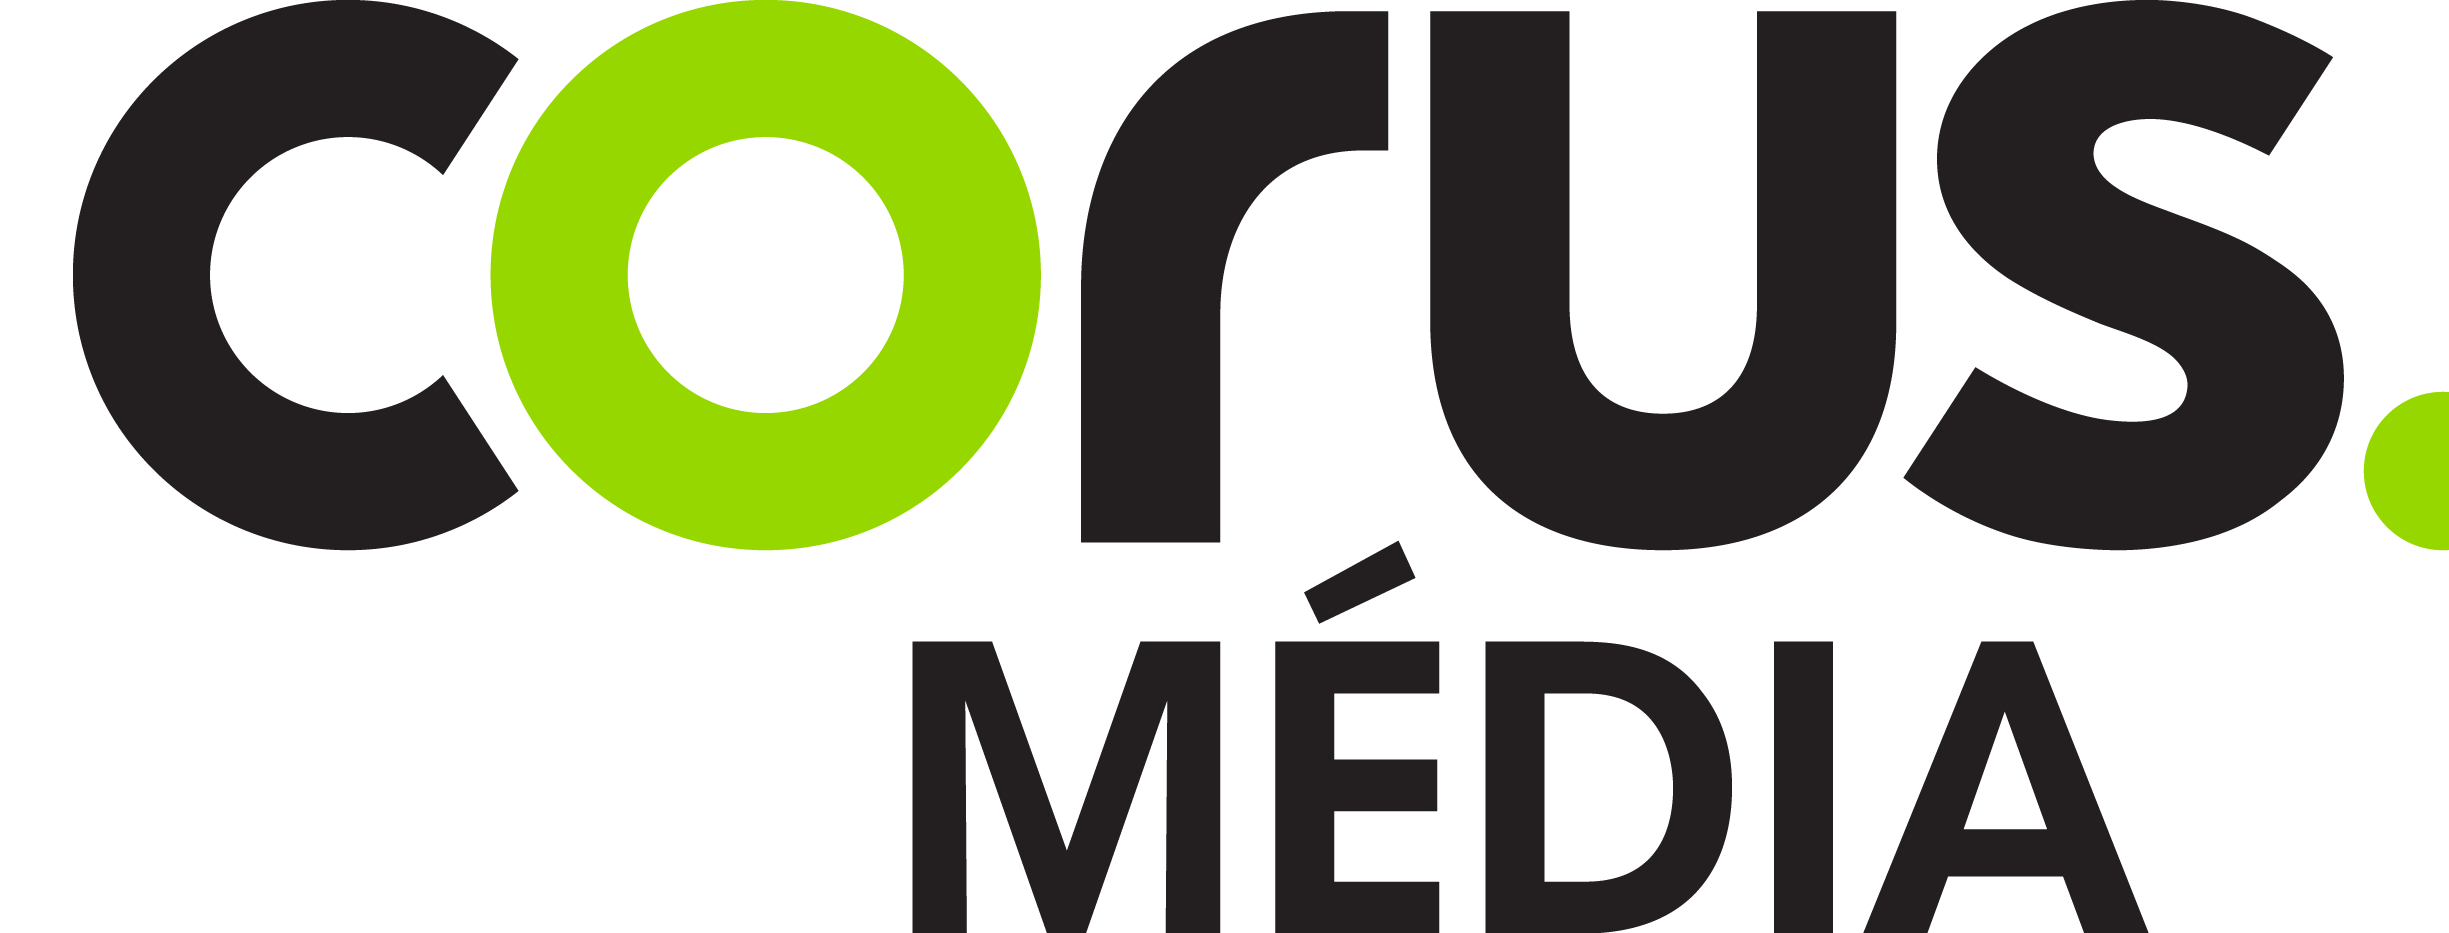 Corus_media_logo.png